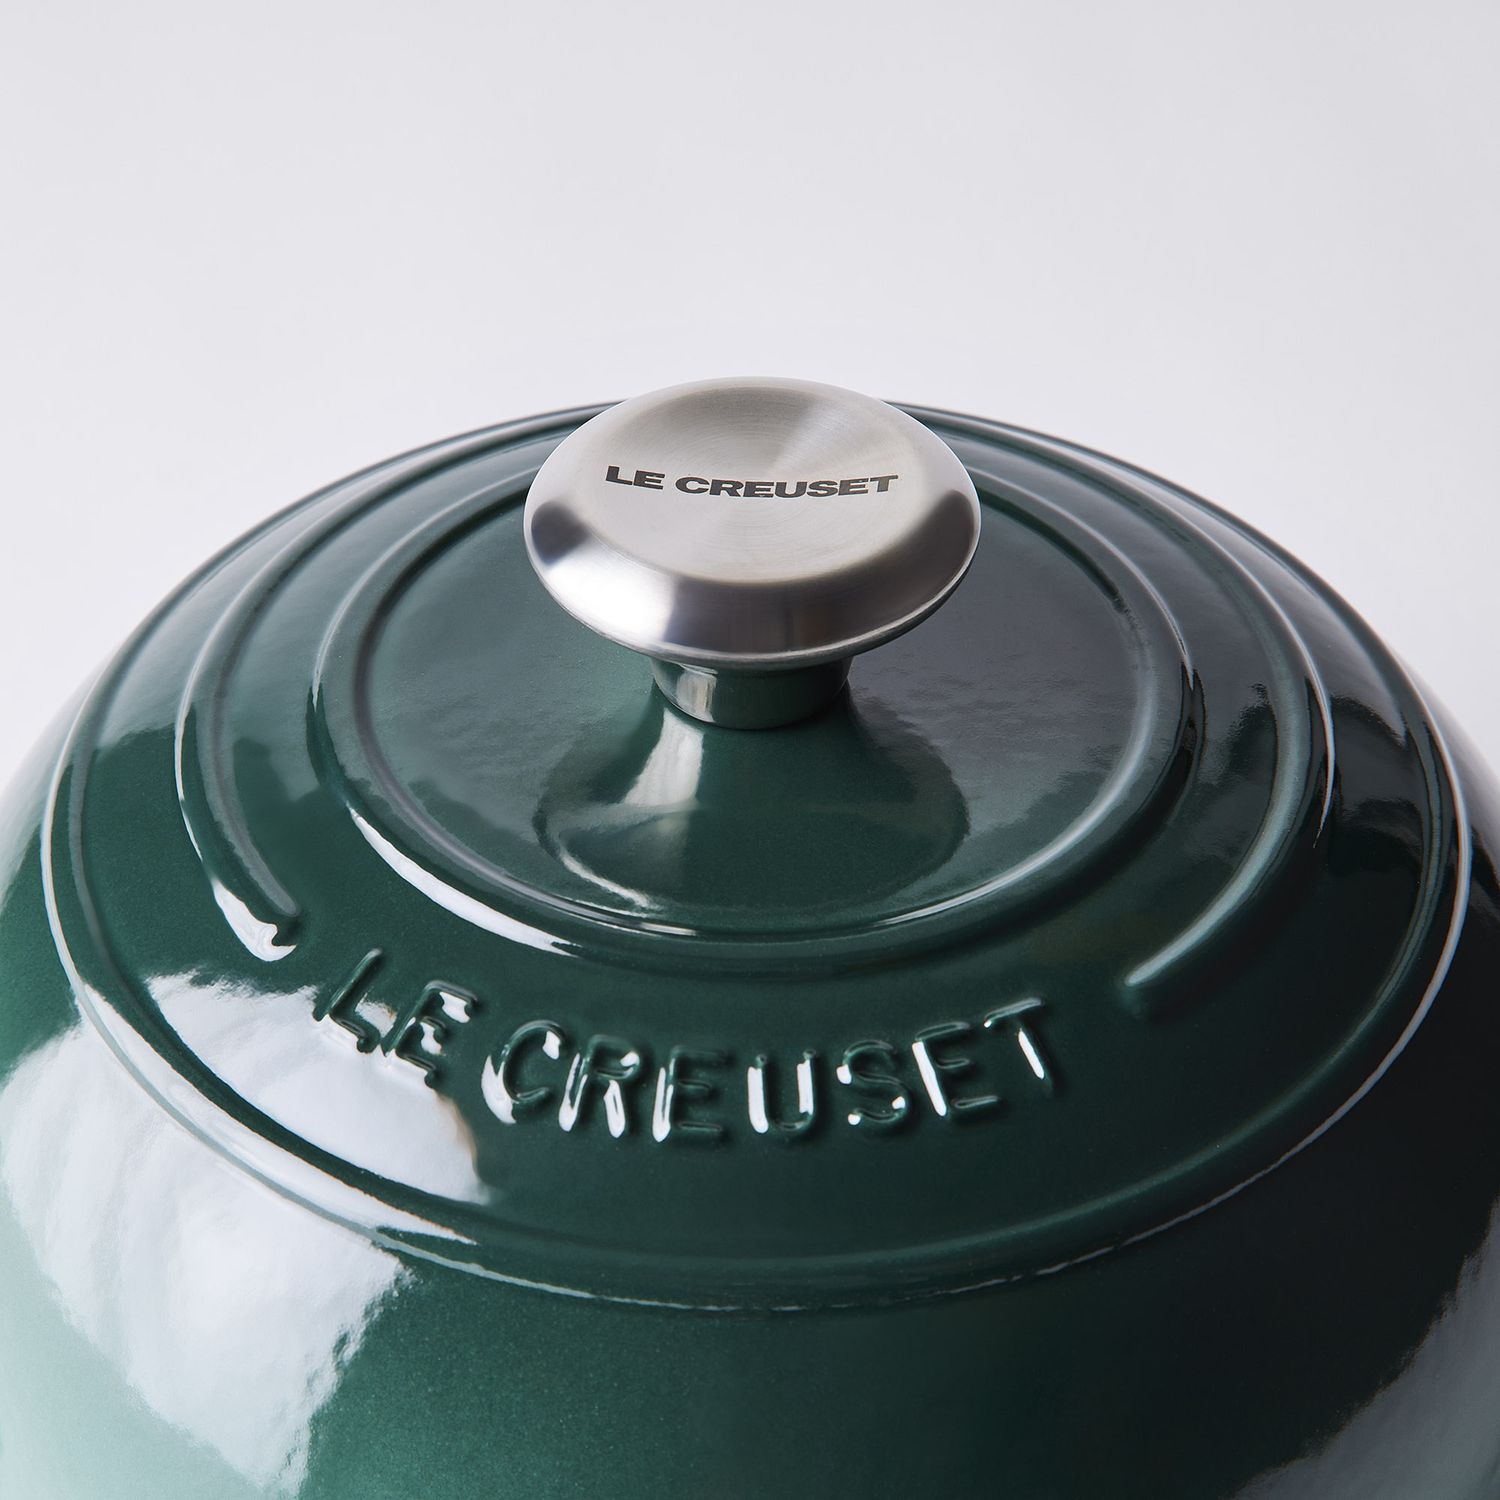 Le Creuset Signature Enameled Cast Iron Rectangular Roasting Pan, 4 Colors  on Food52